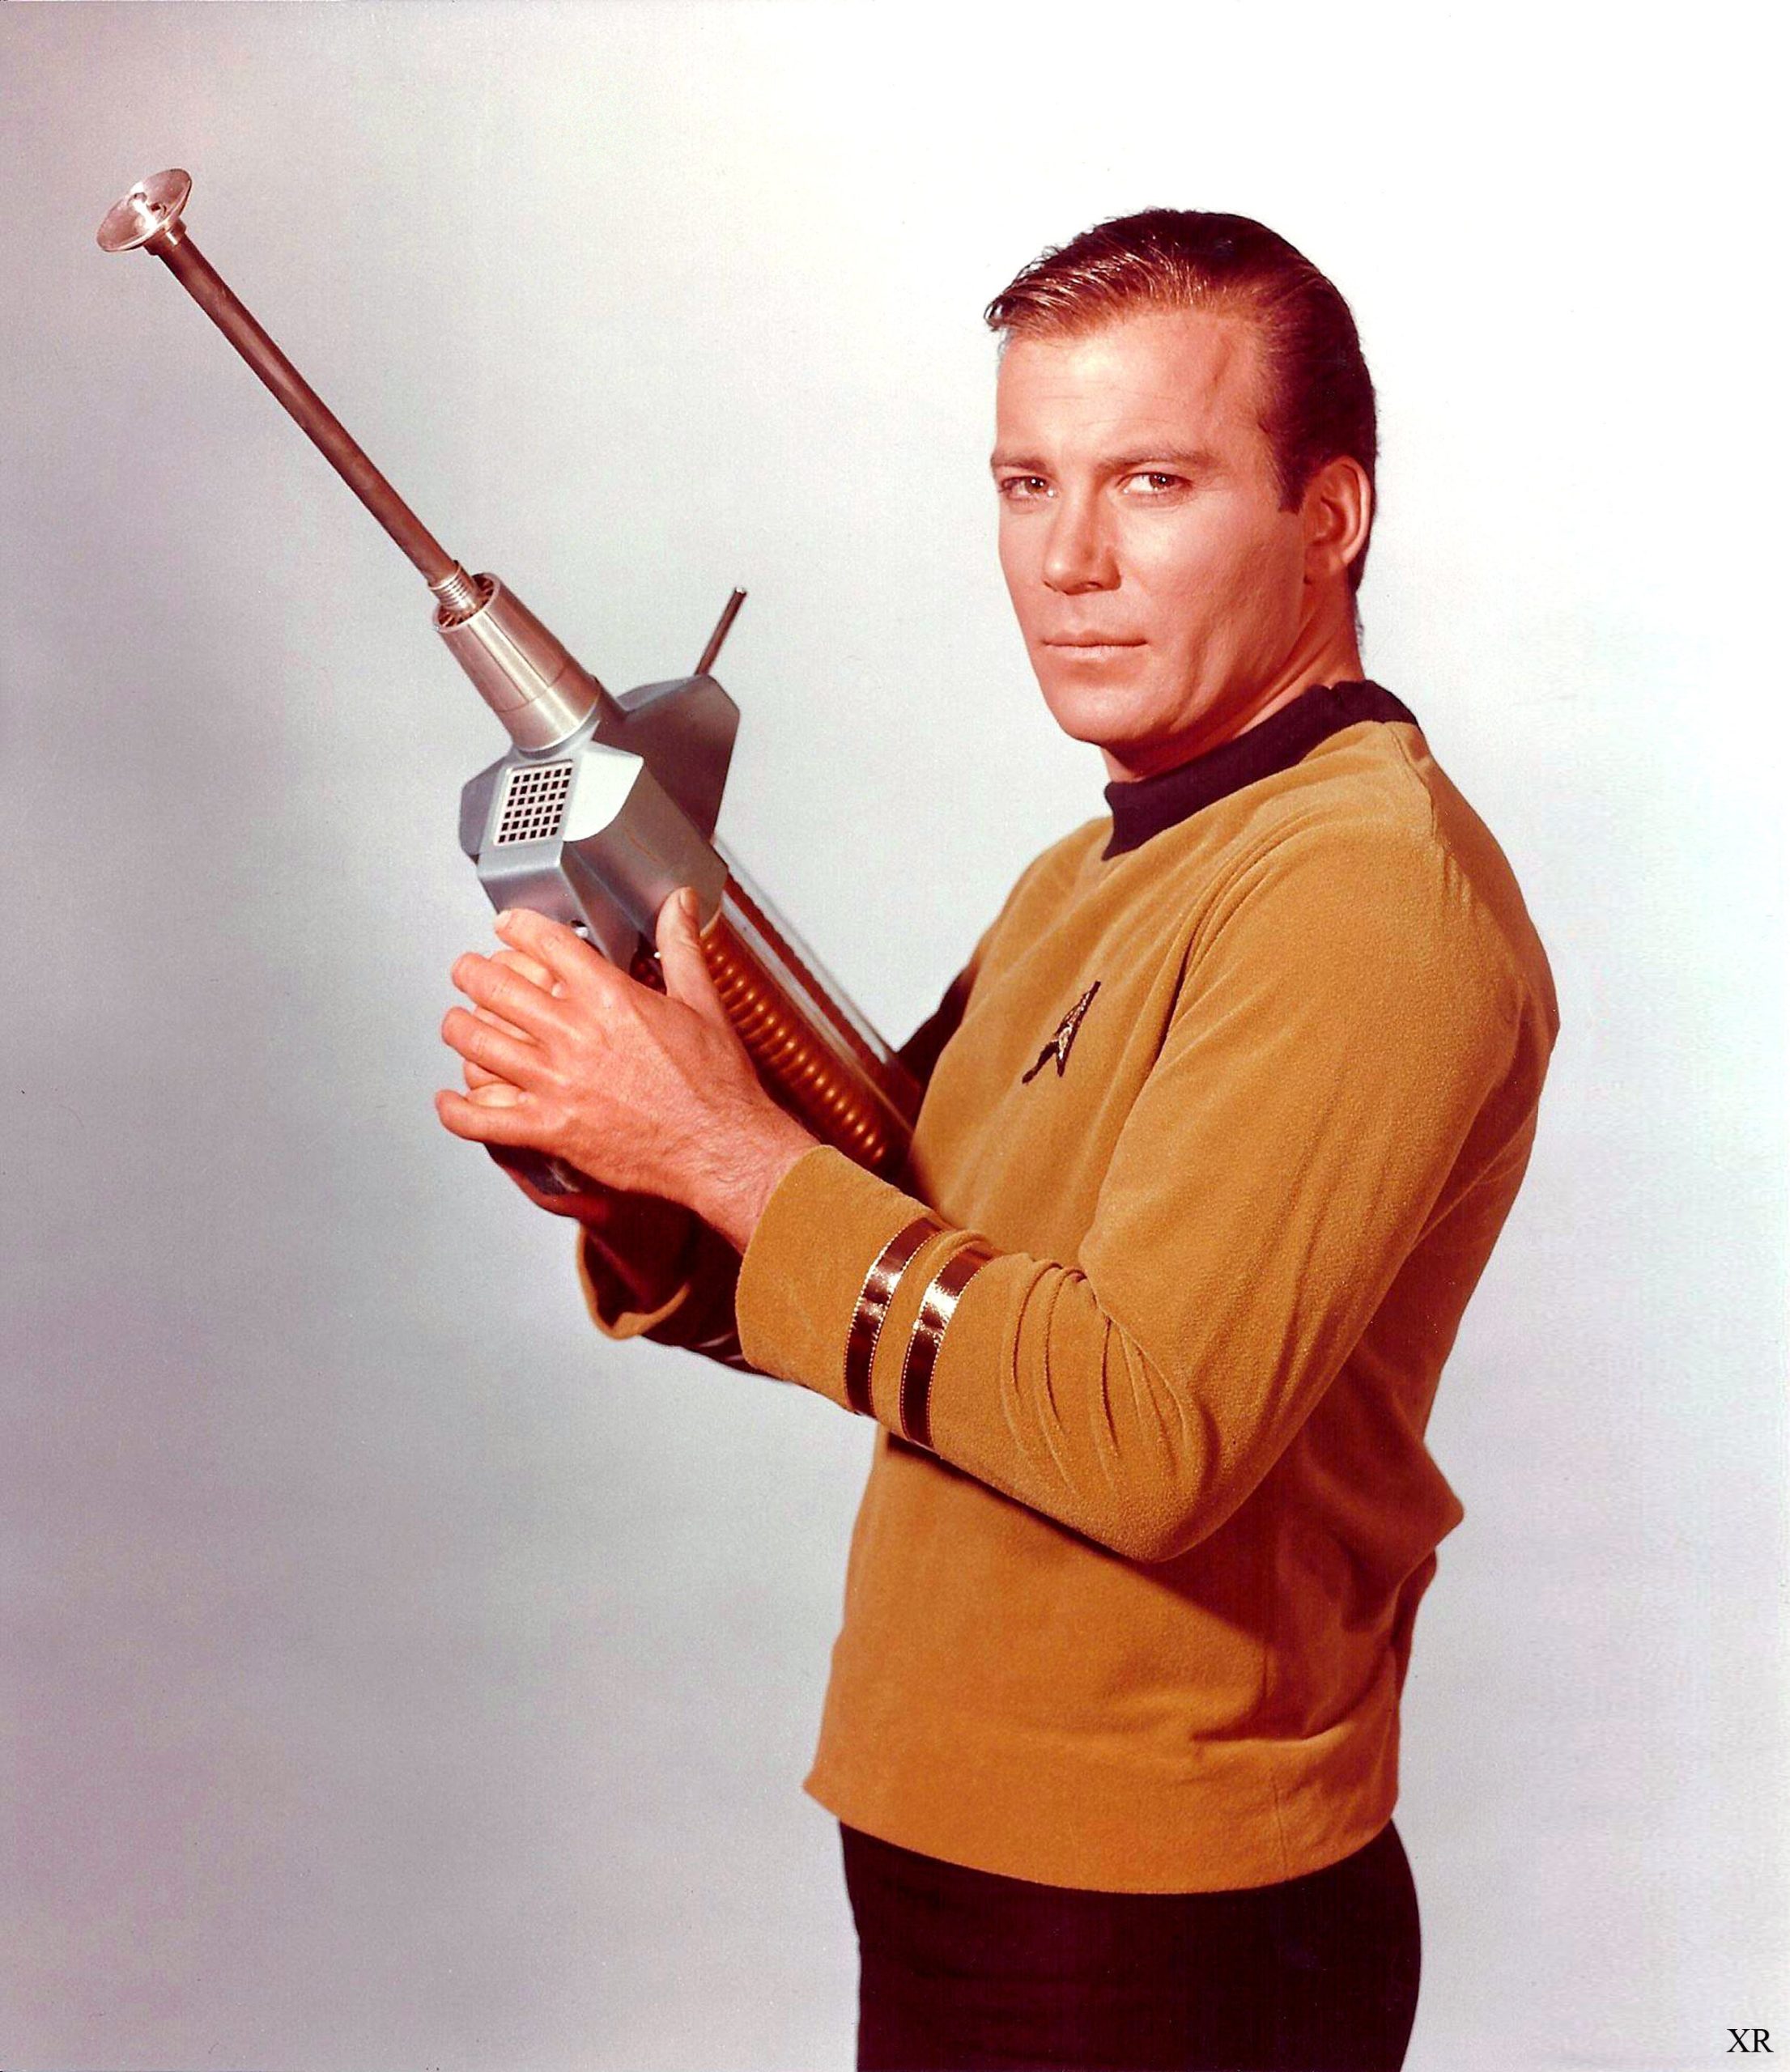 Actor William Shatner posing with the phaser rifle designed by Reuben Klamer for Star Trek. (Image: MovieStillsDB.com)